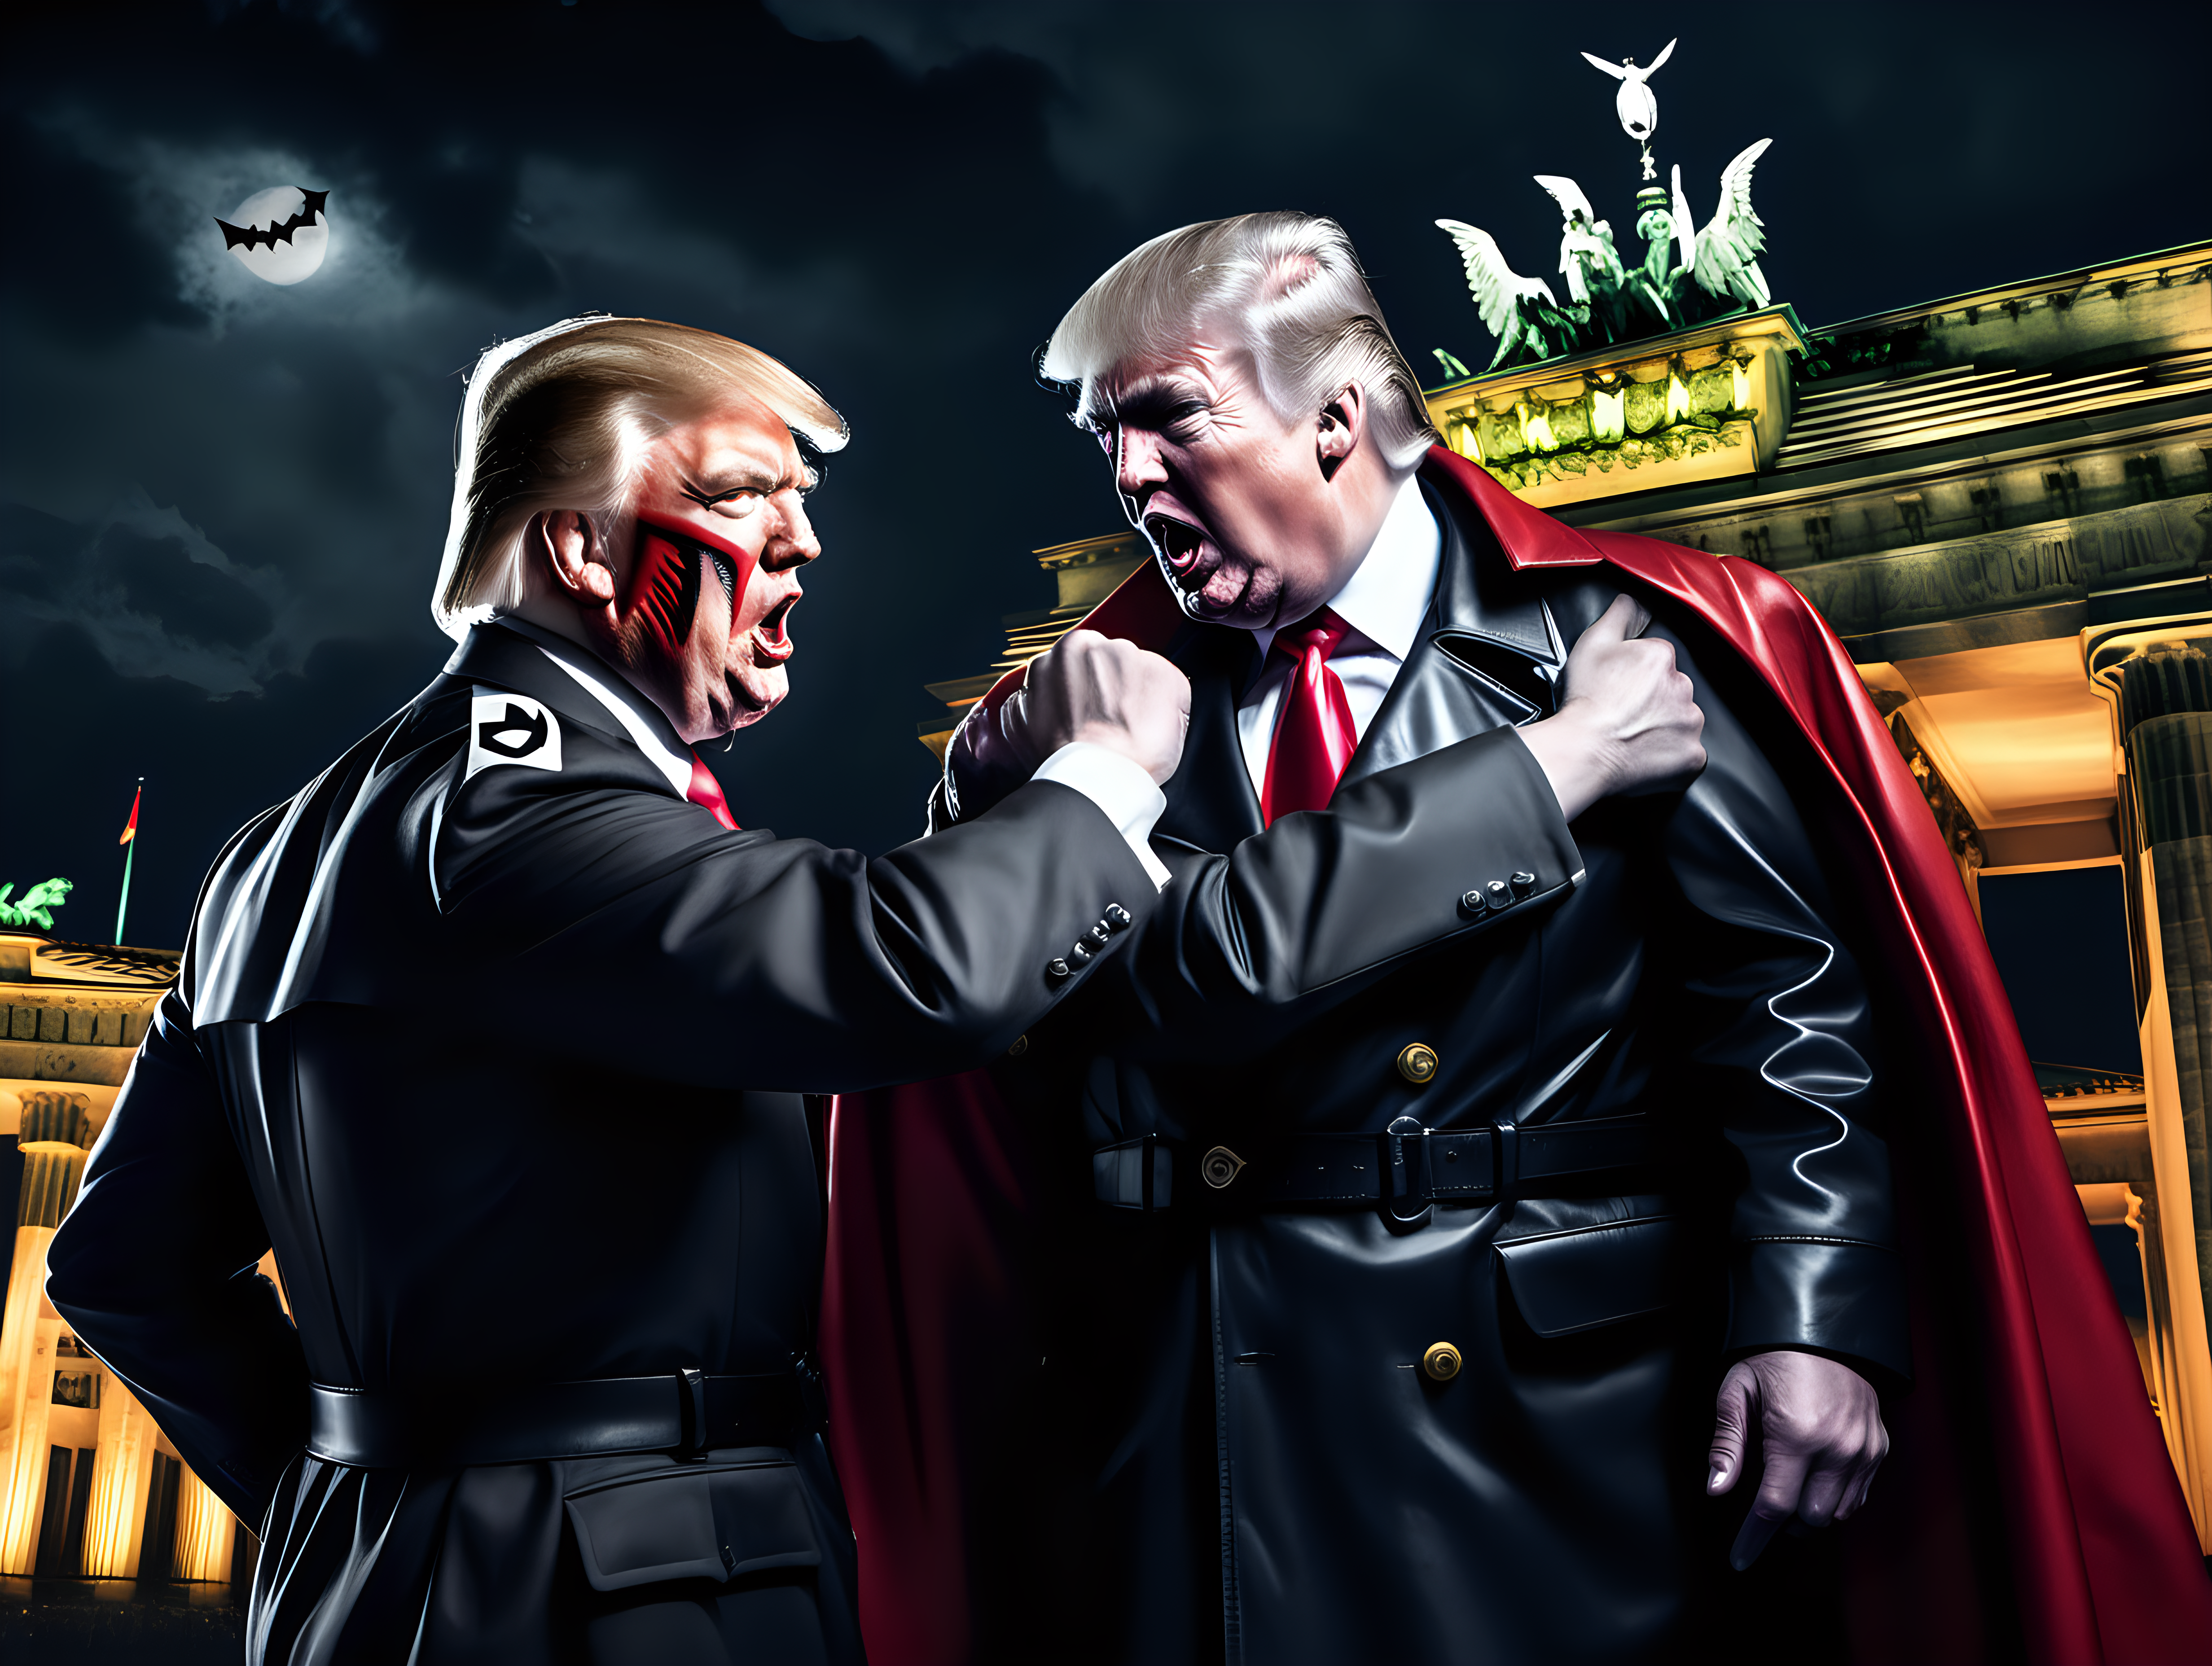 Donald Trump in a Nazi uniform fighting Dracula